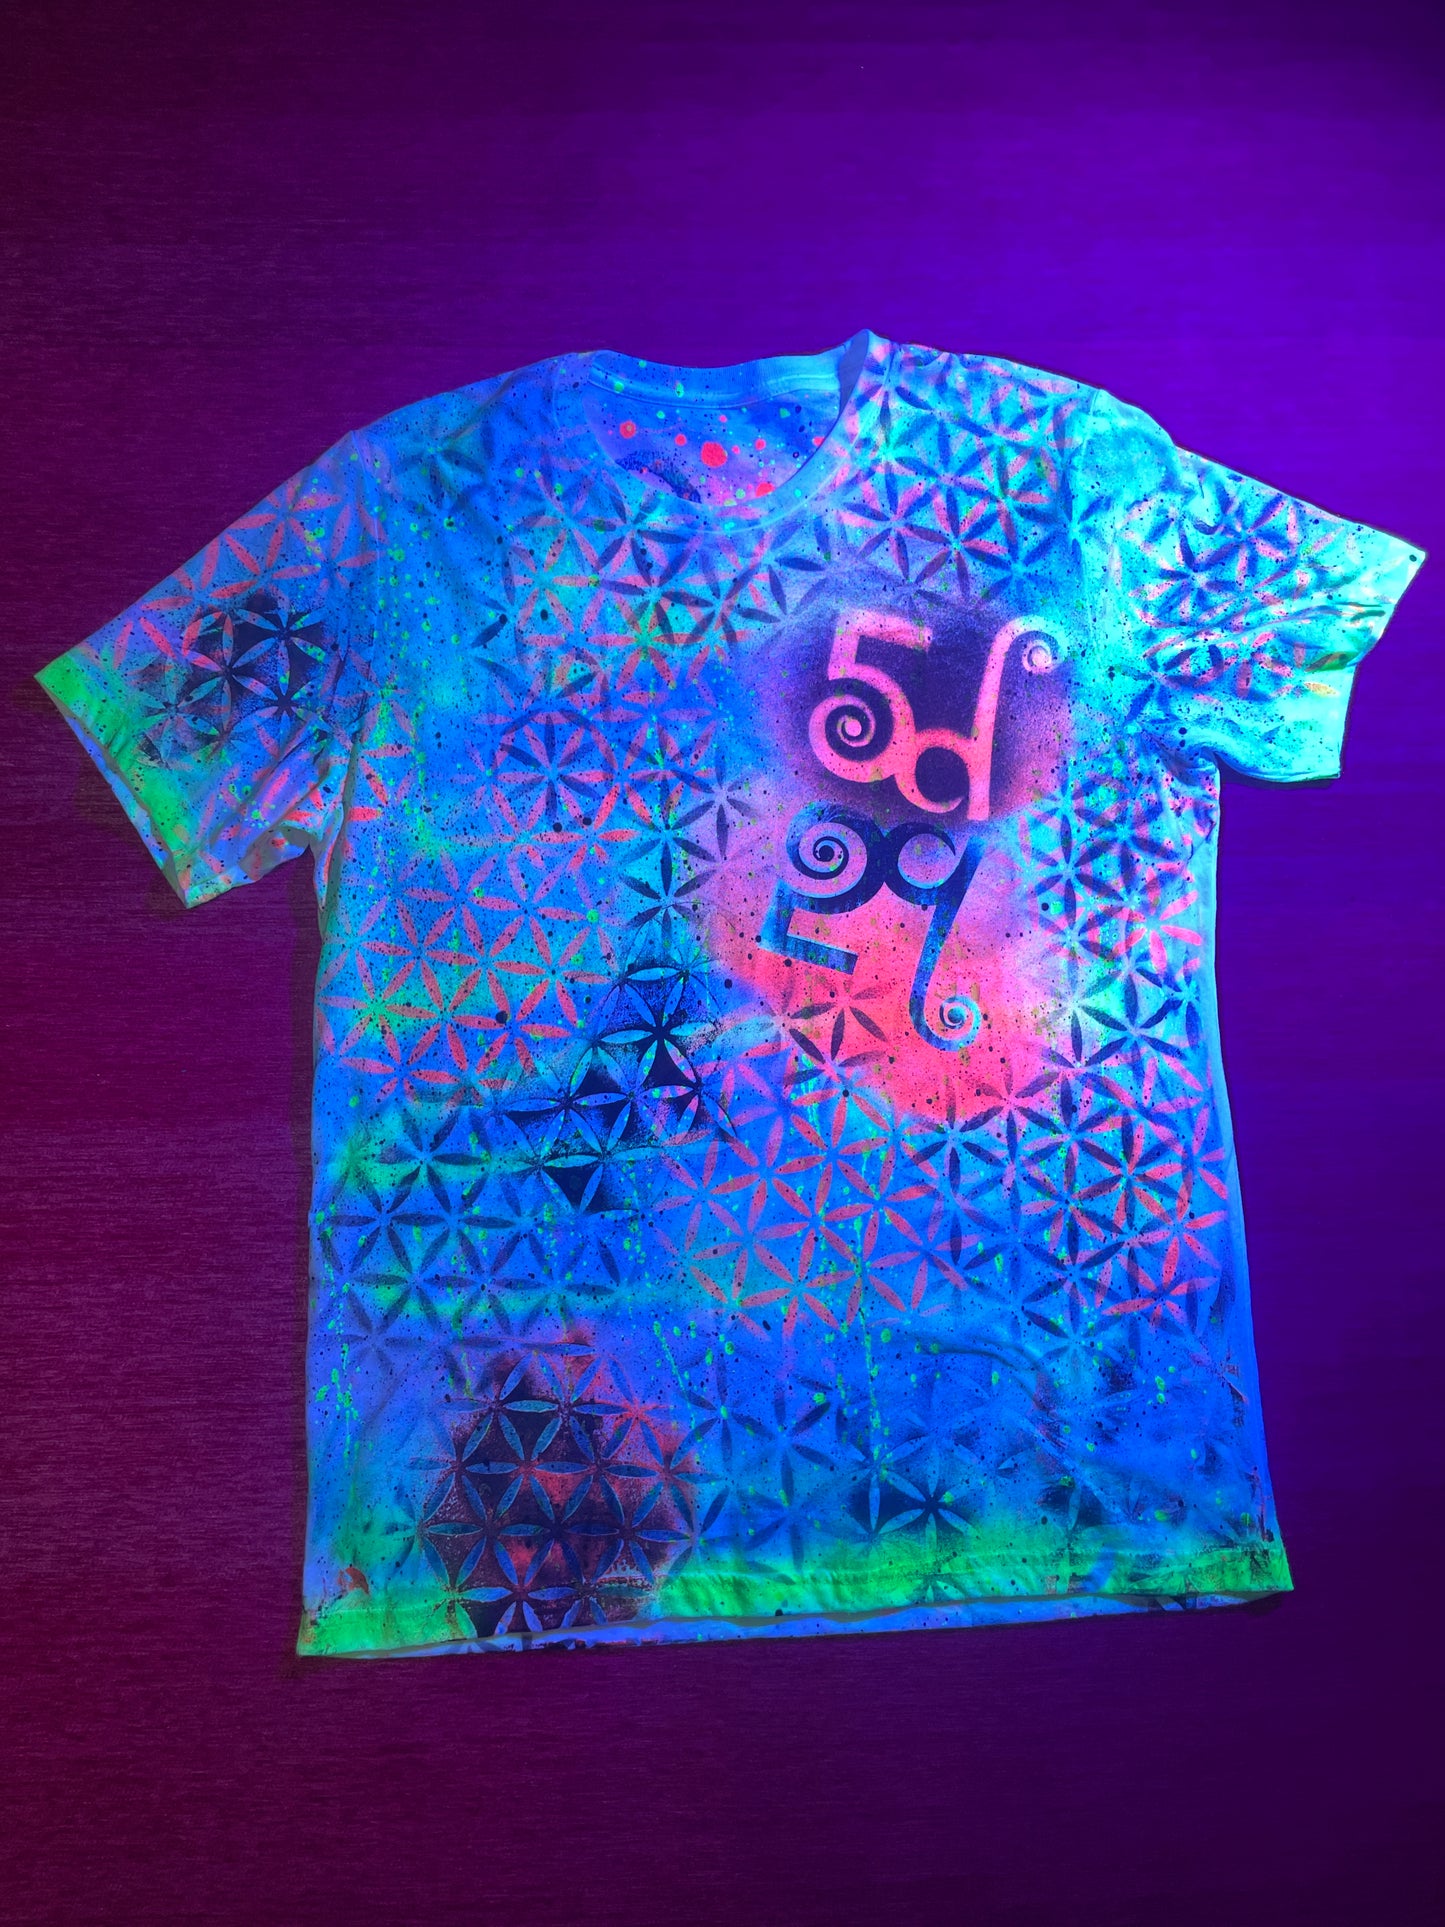 5d Art Shirt [Custom]